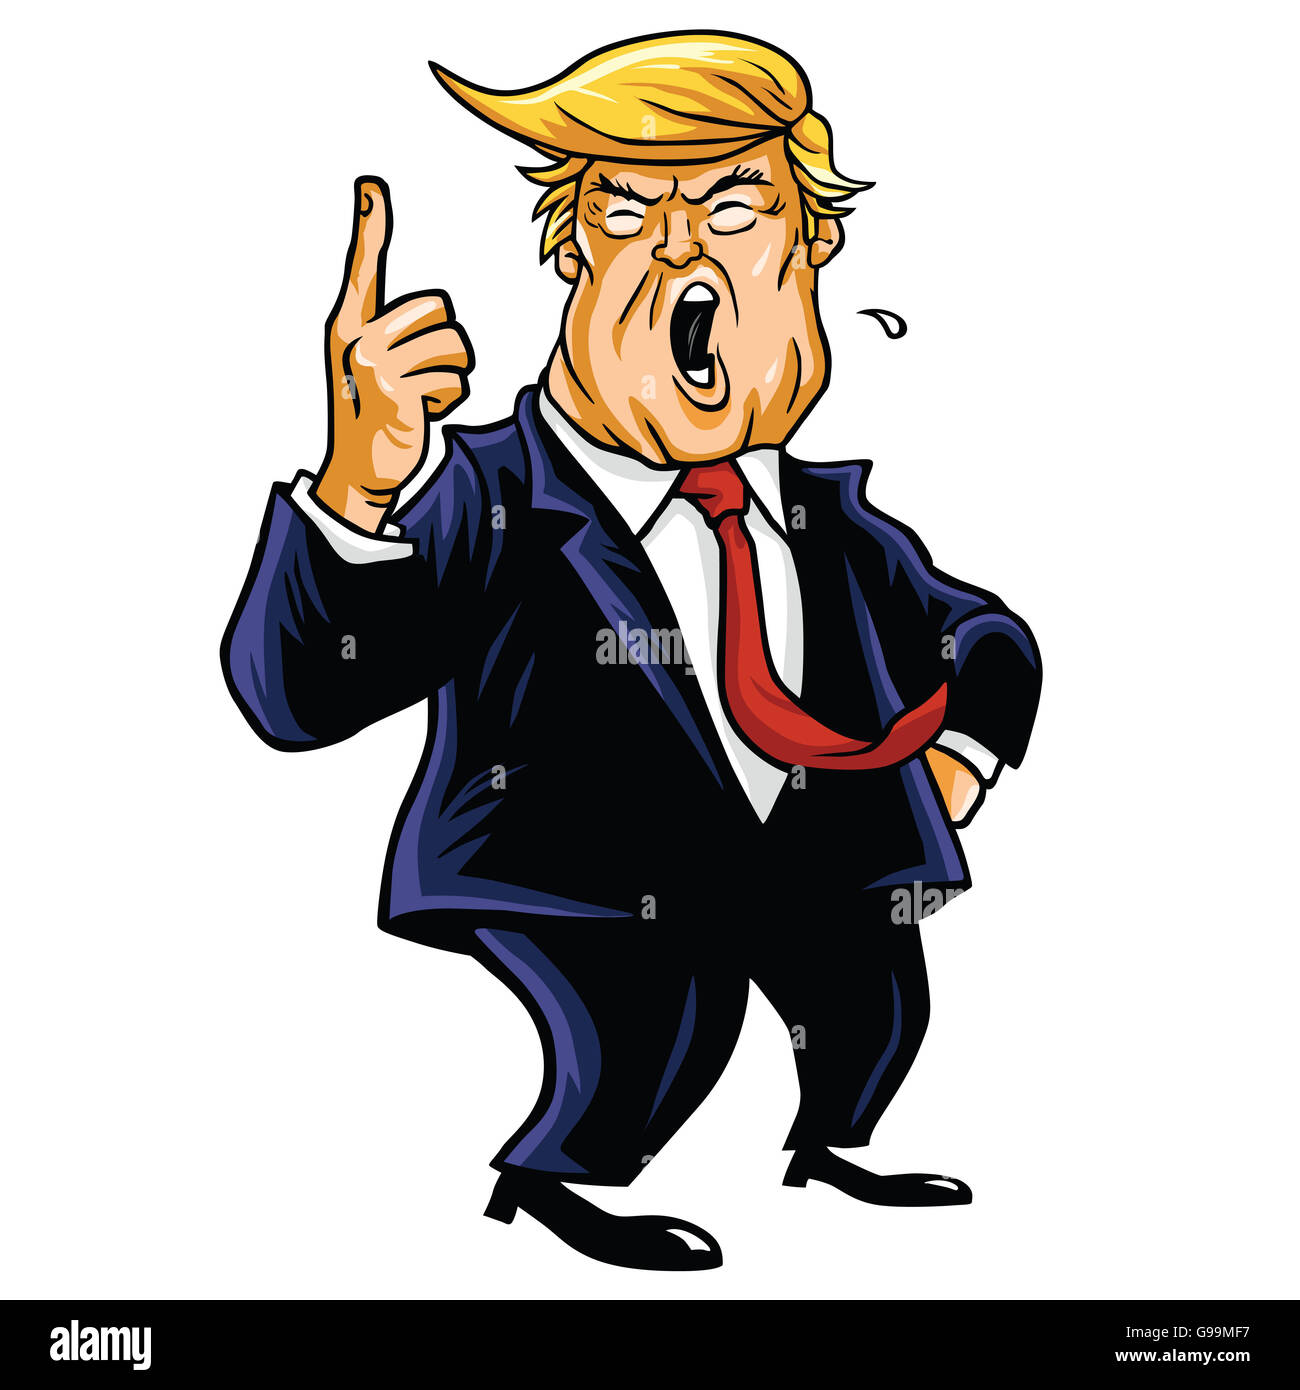 Donald Trump Cartoon Shouting, You're Fired! Caricature Stock Photo